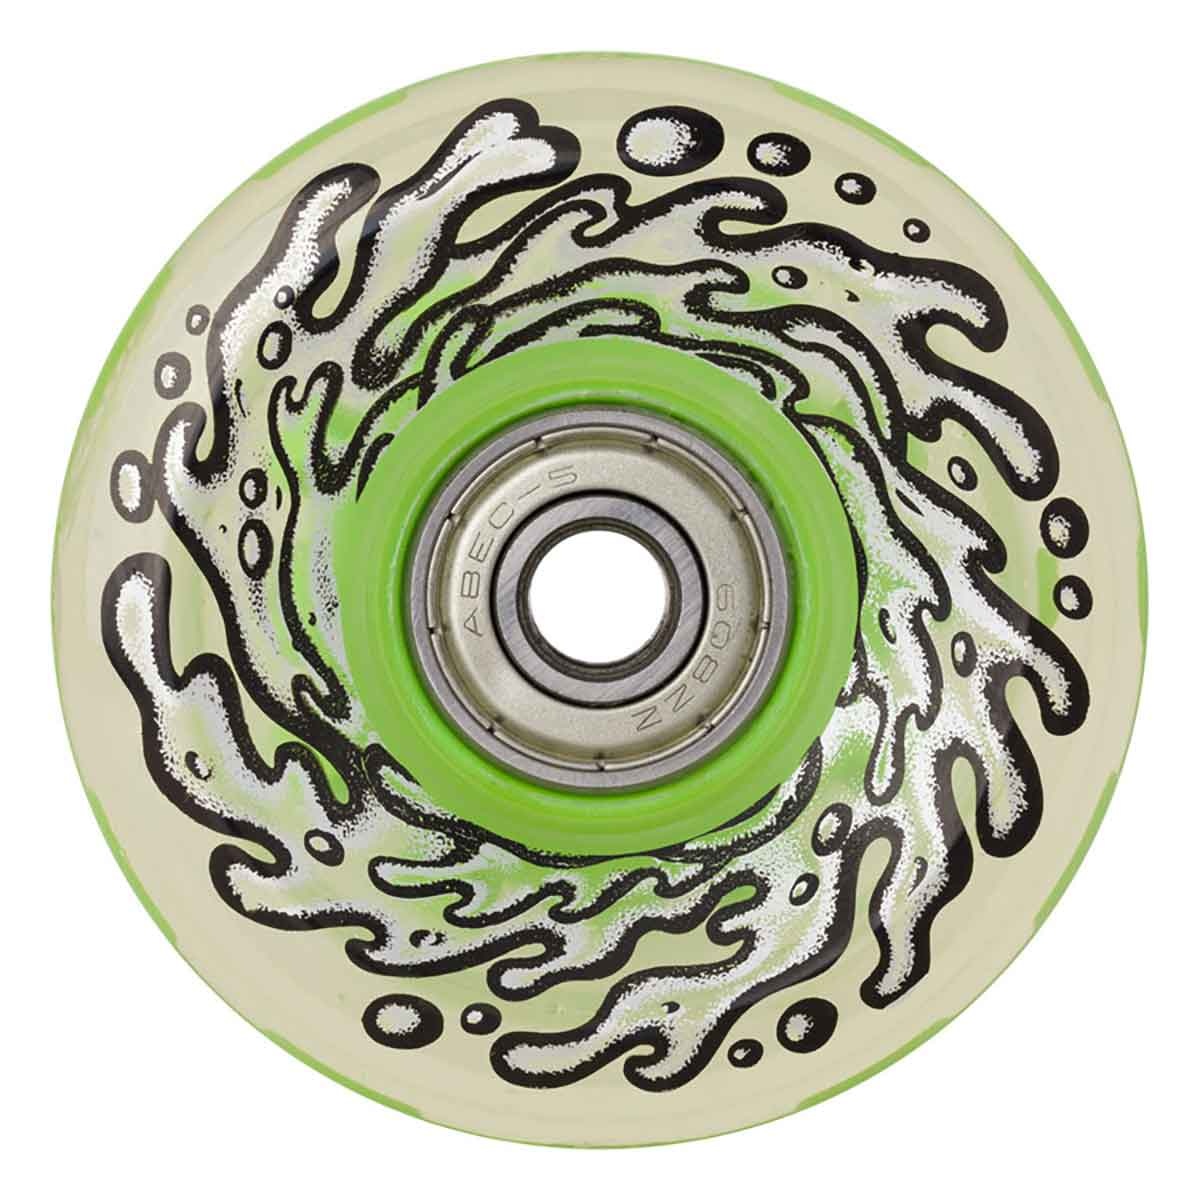 60mm light ups with green led and bearings og slime 78a wheels - Studio  Skate Supply